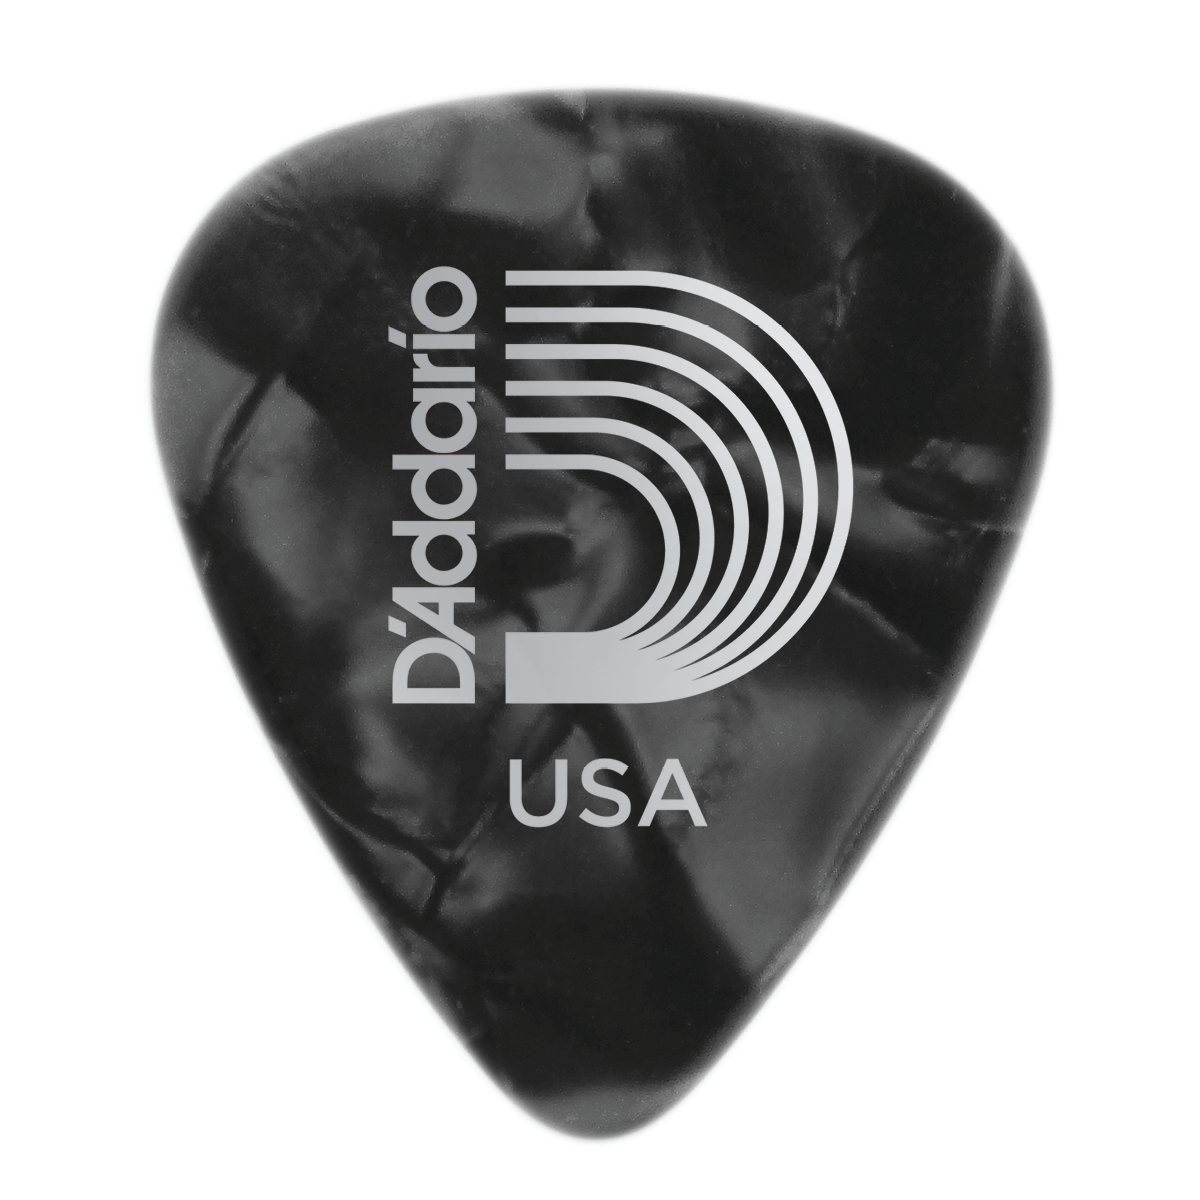 D'Addario Black Pearl Celluloid Guitar Pick, Extra Heavy